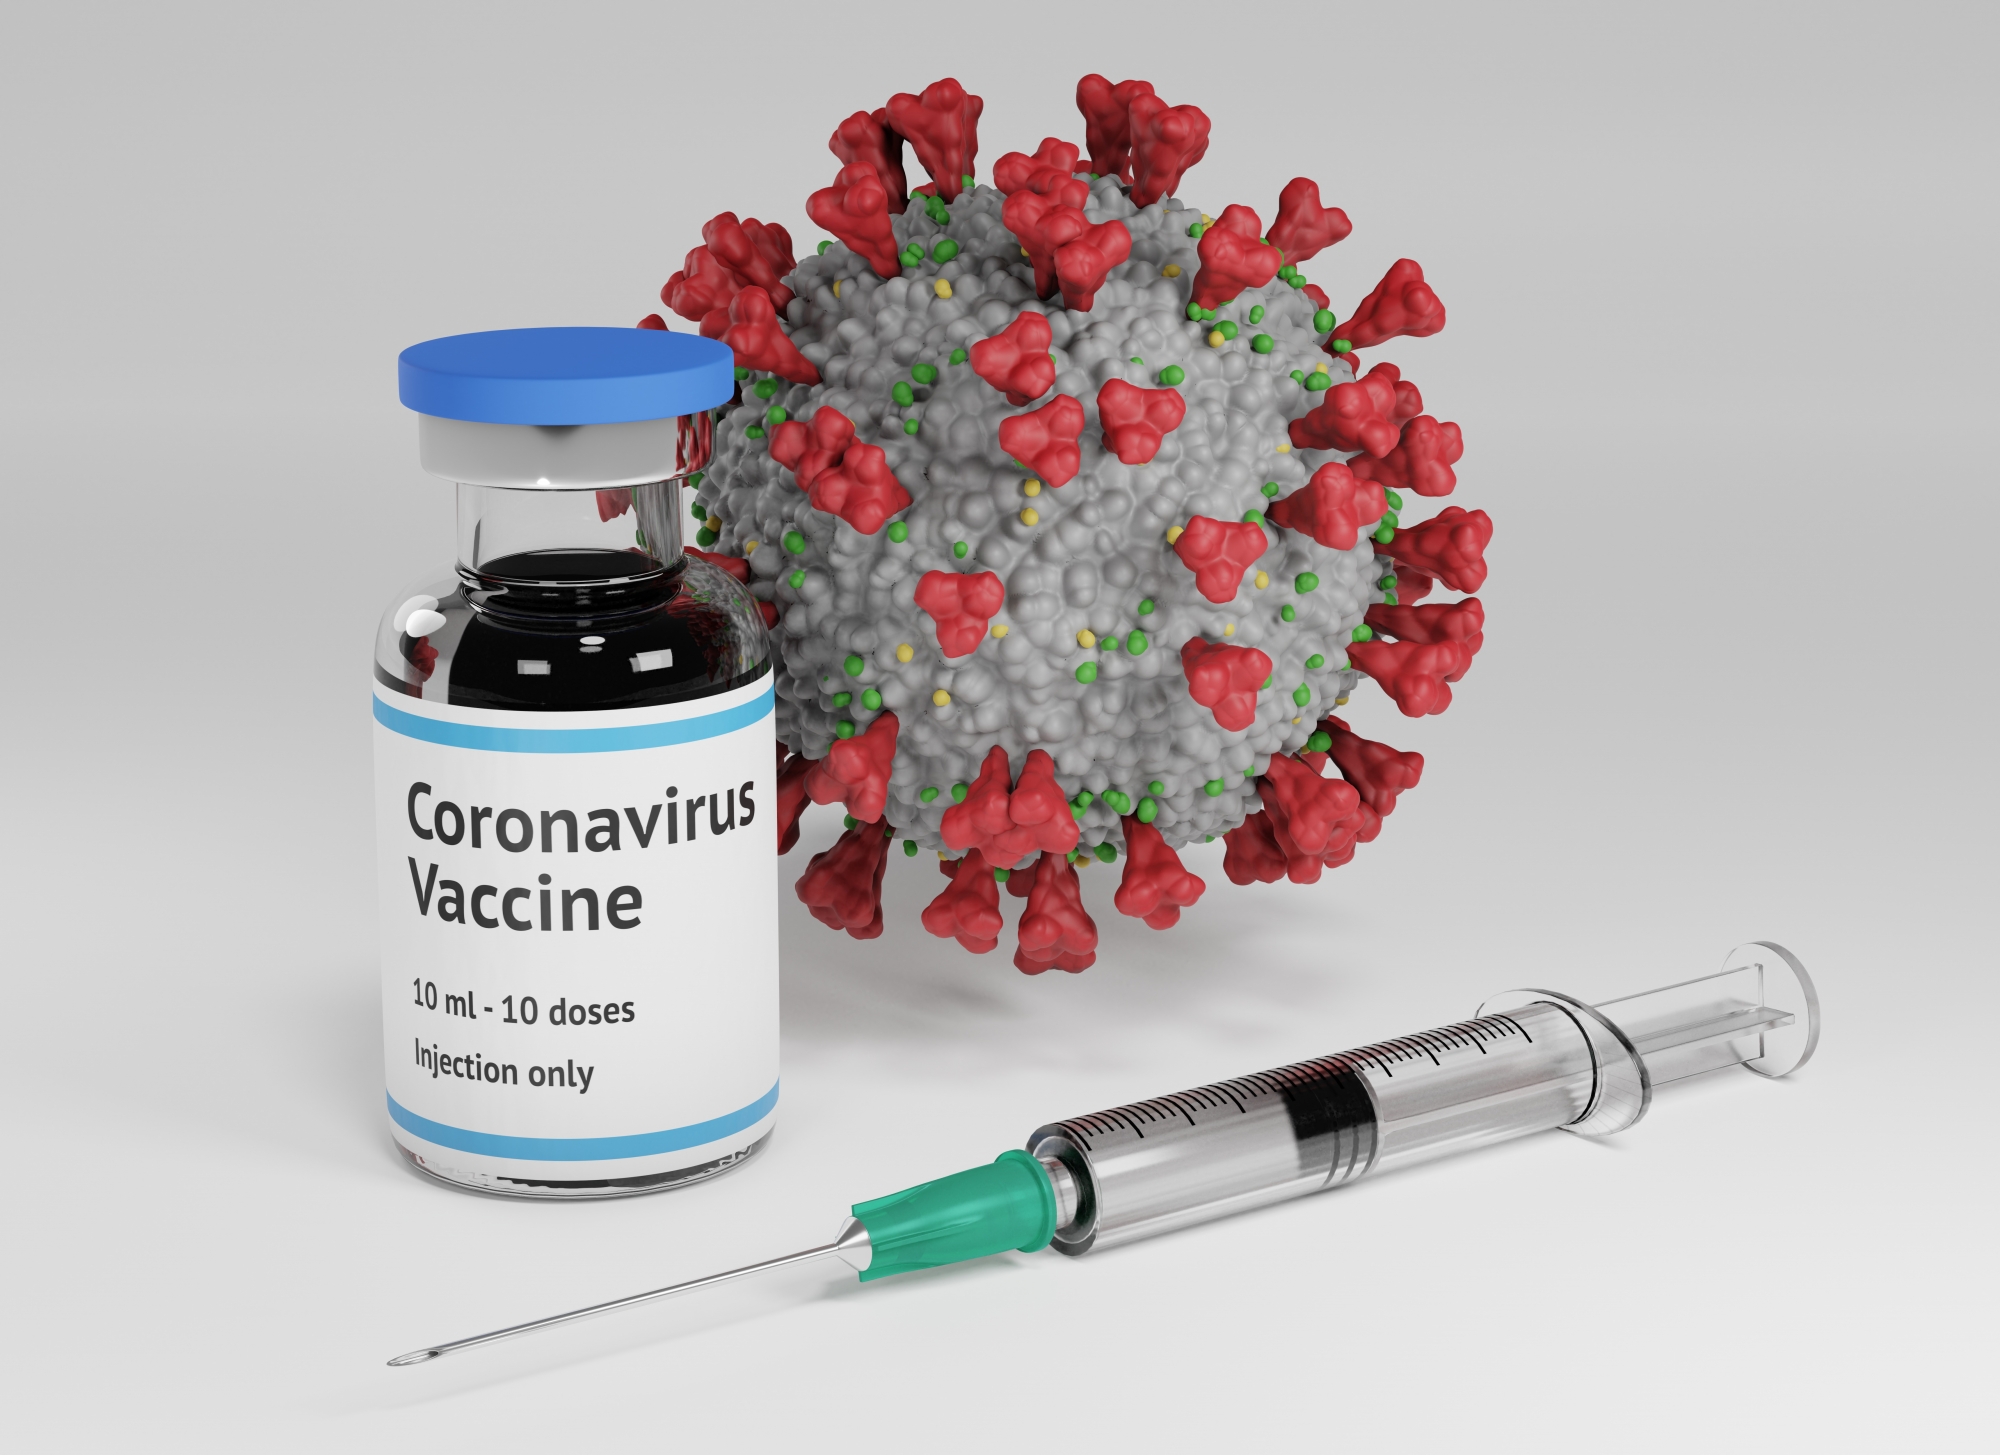 Sars cov 2 вакцина